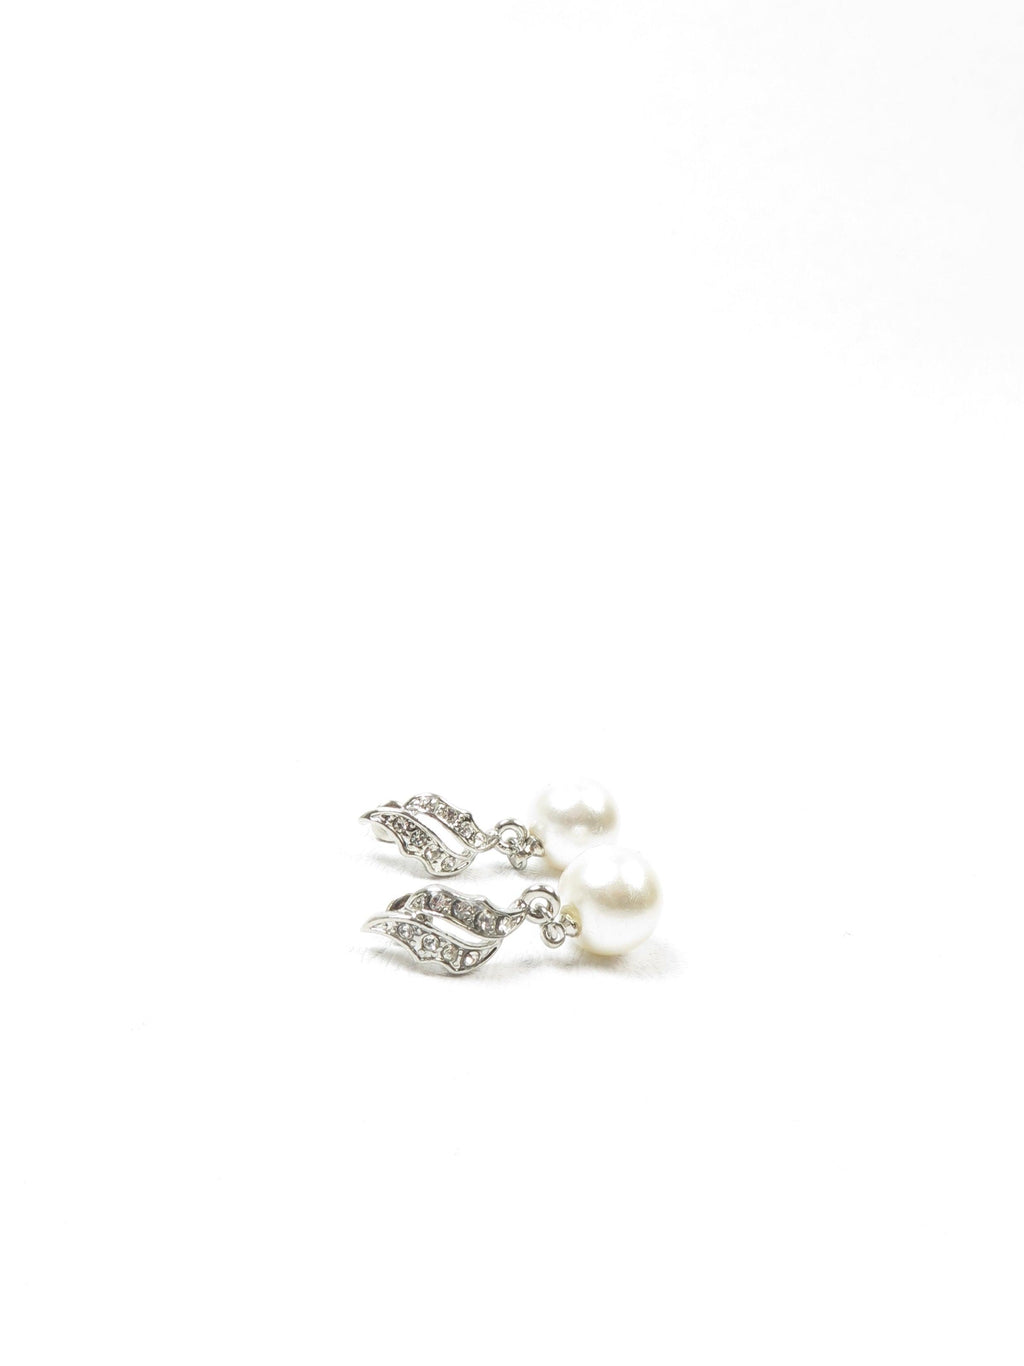 Pearl & Diamante Drop Earrings - The Harlequin